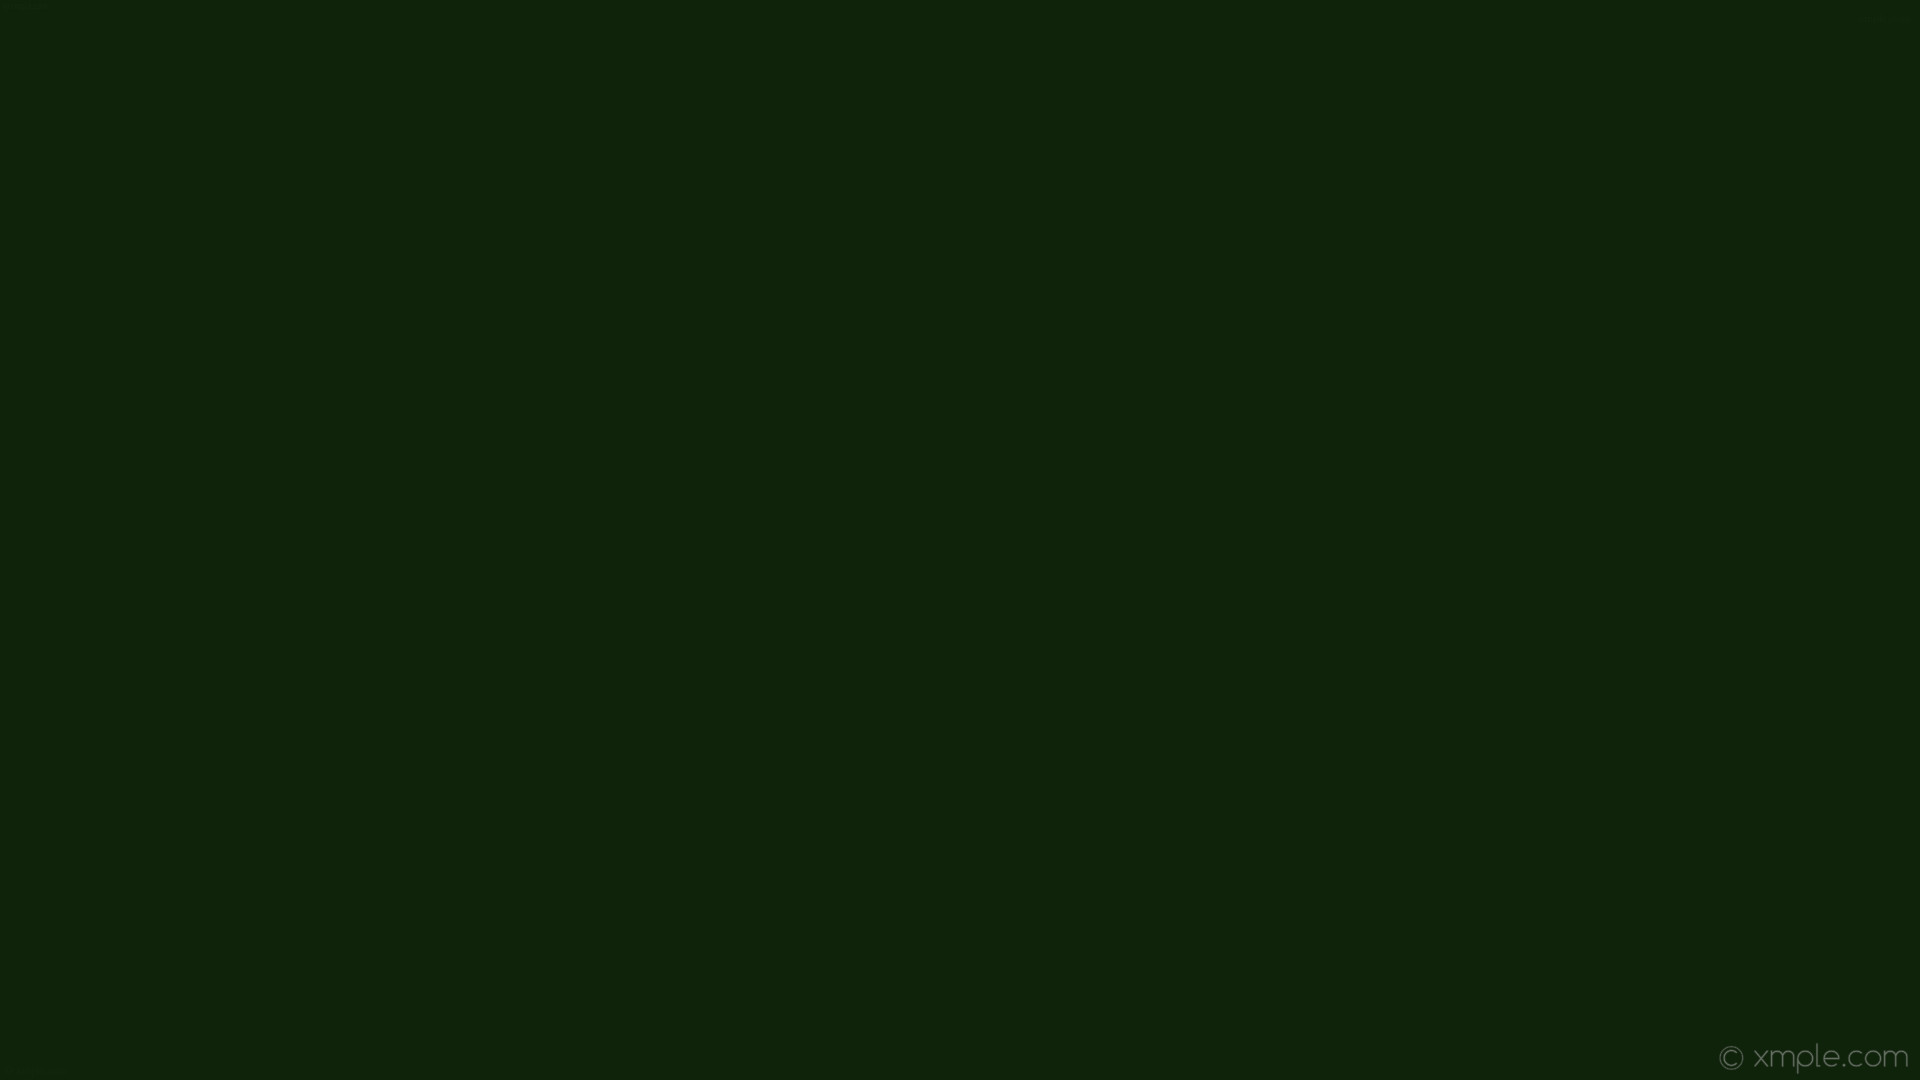 1920x1080 wallpaper one colour solid color single green plain dark green #0f220a